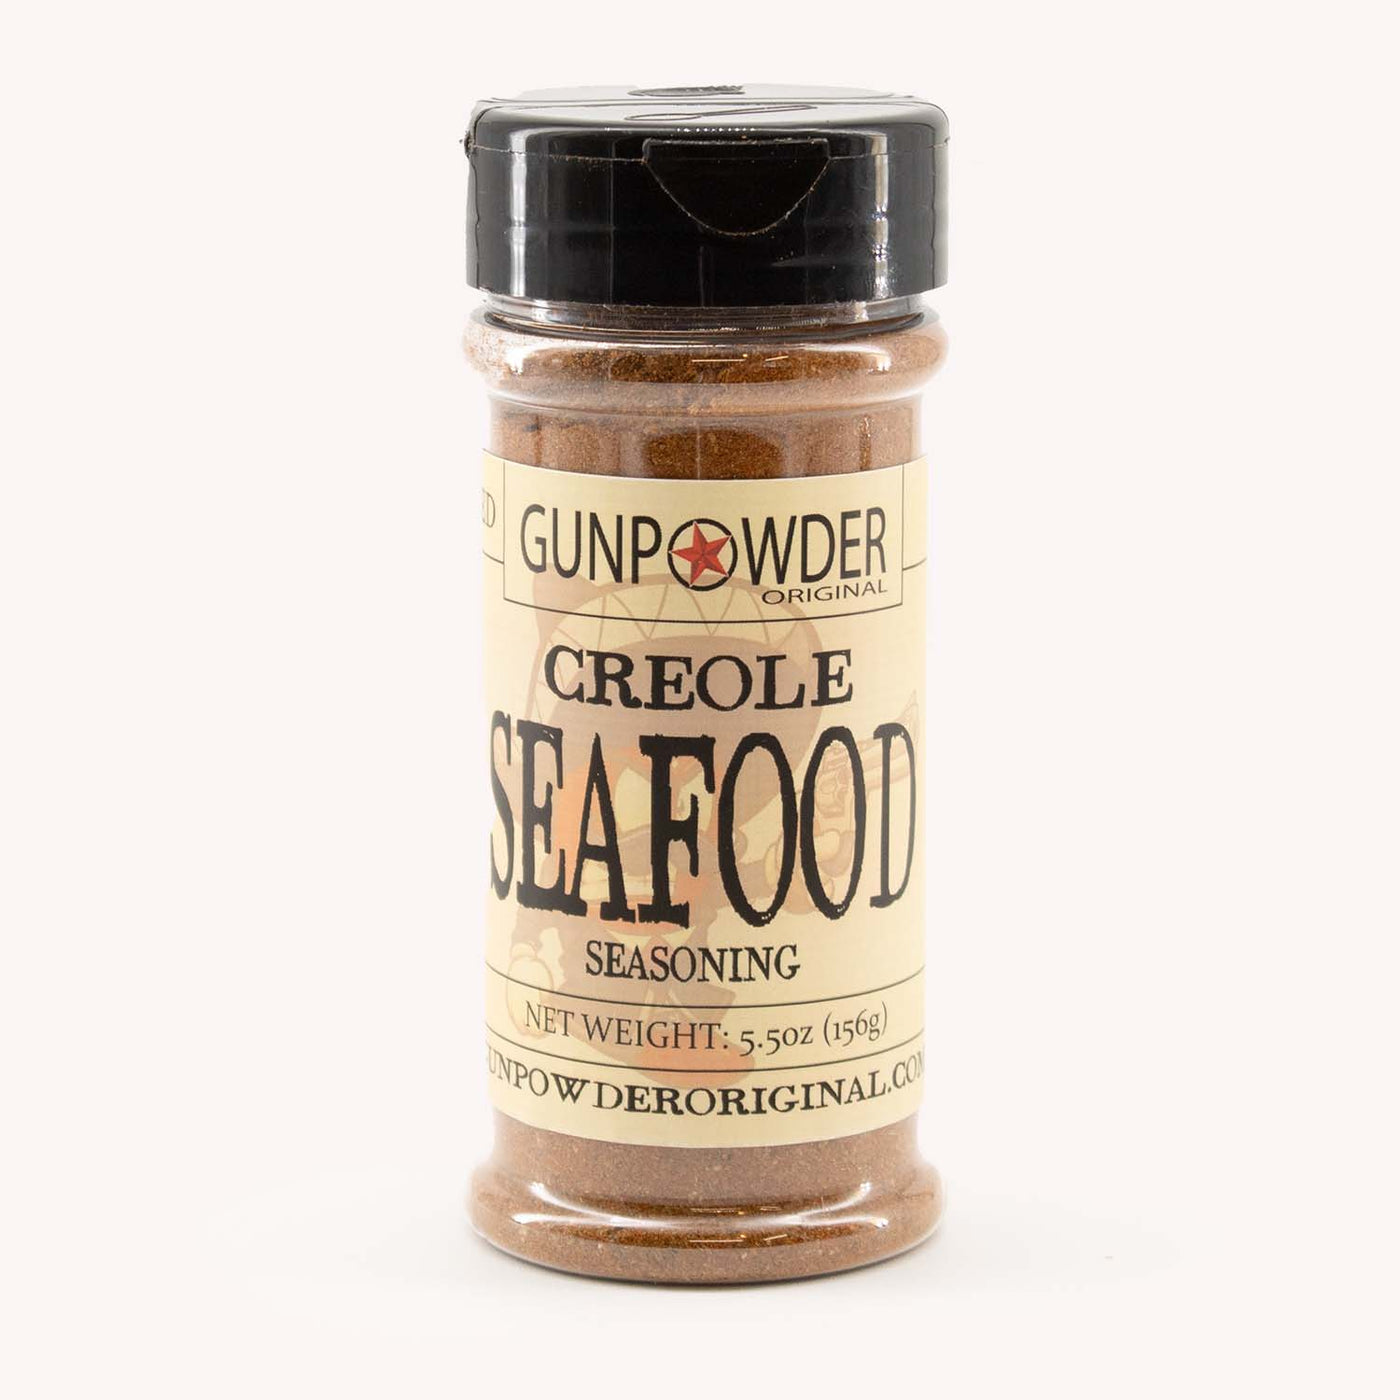 Gunpowder Original Creole Seafood Seasoning